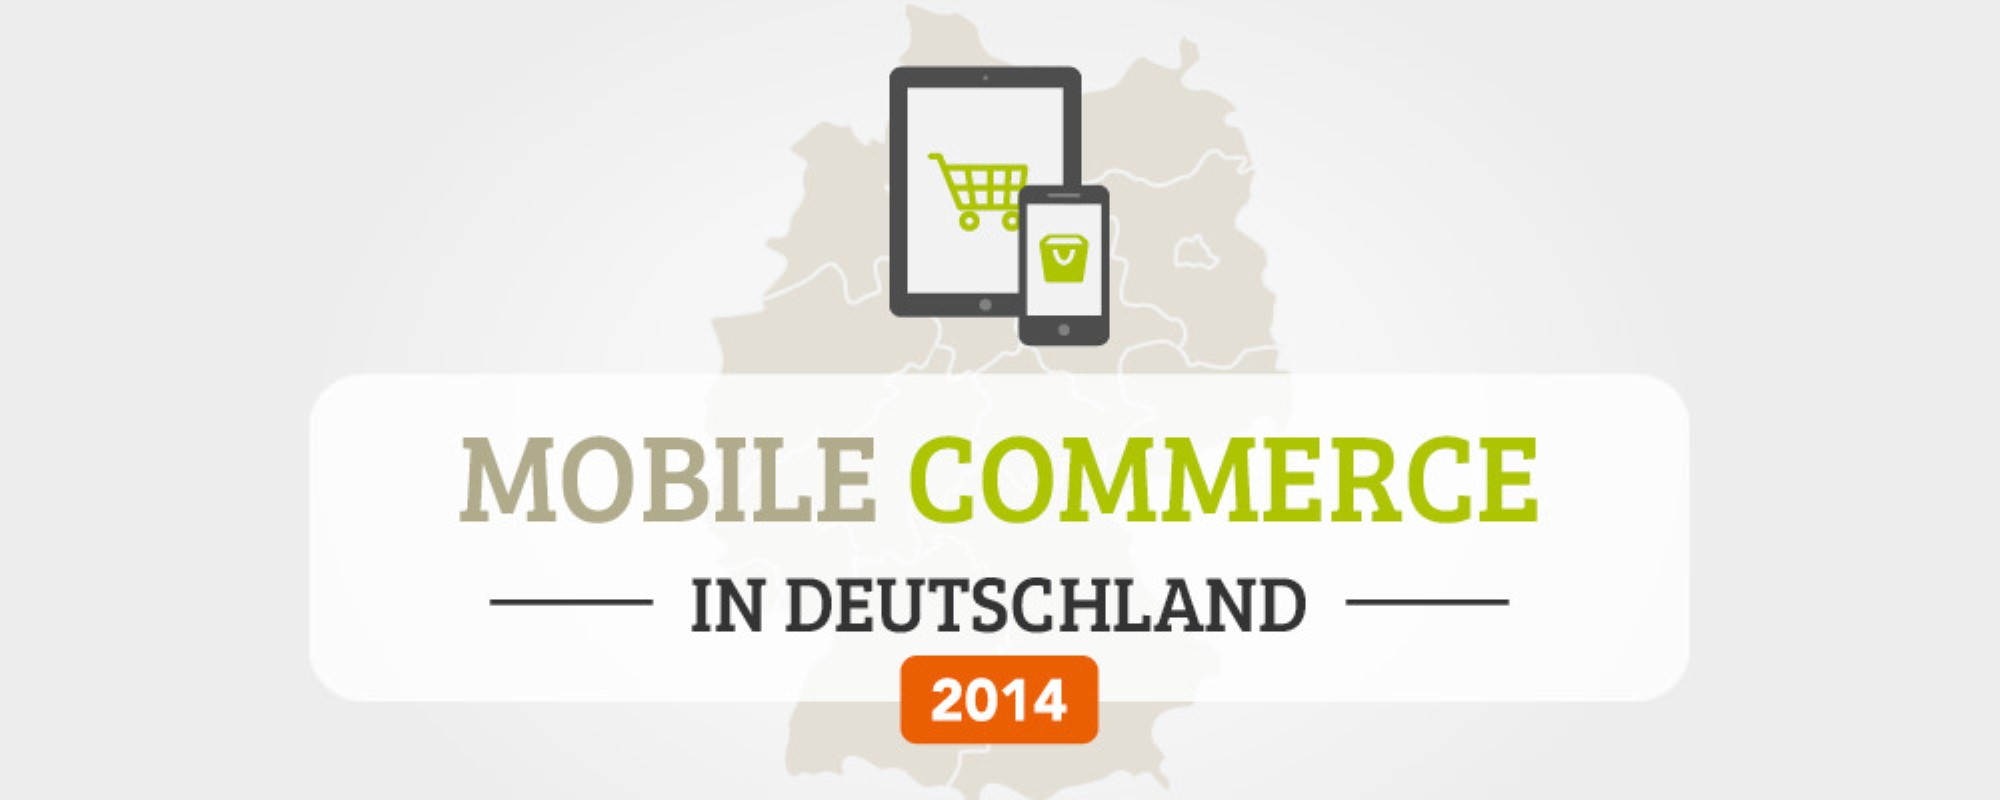 Mobile Commerce in Deutschland - Infografik